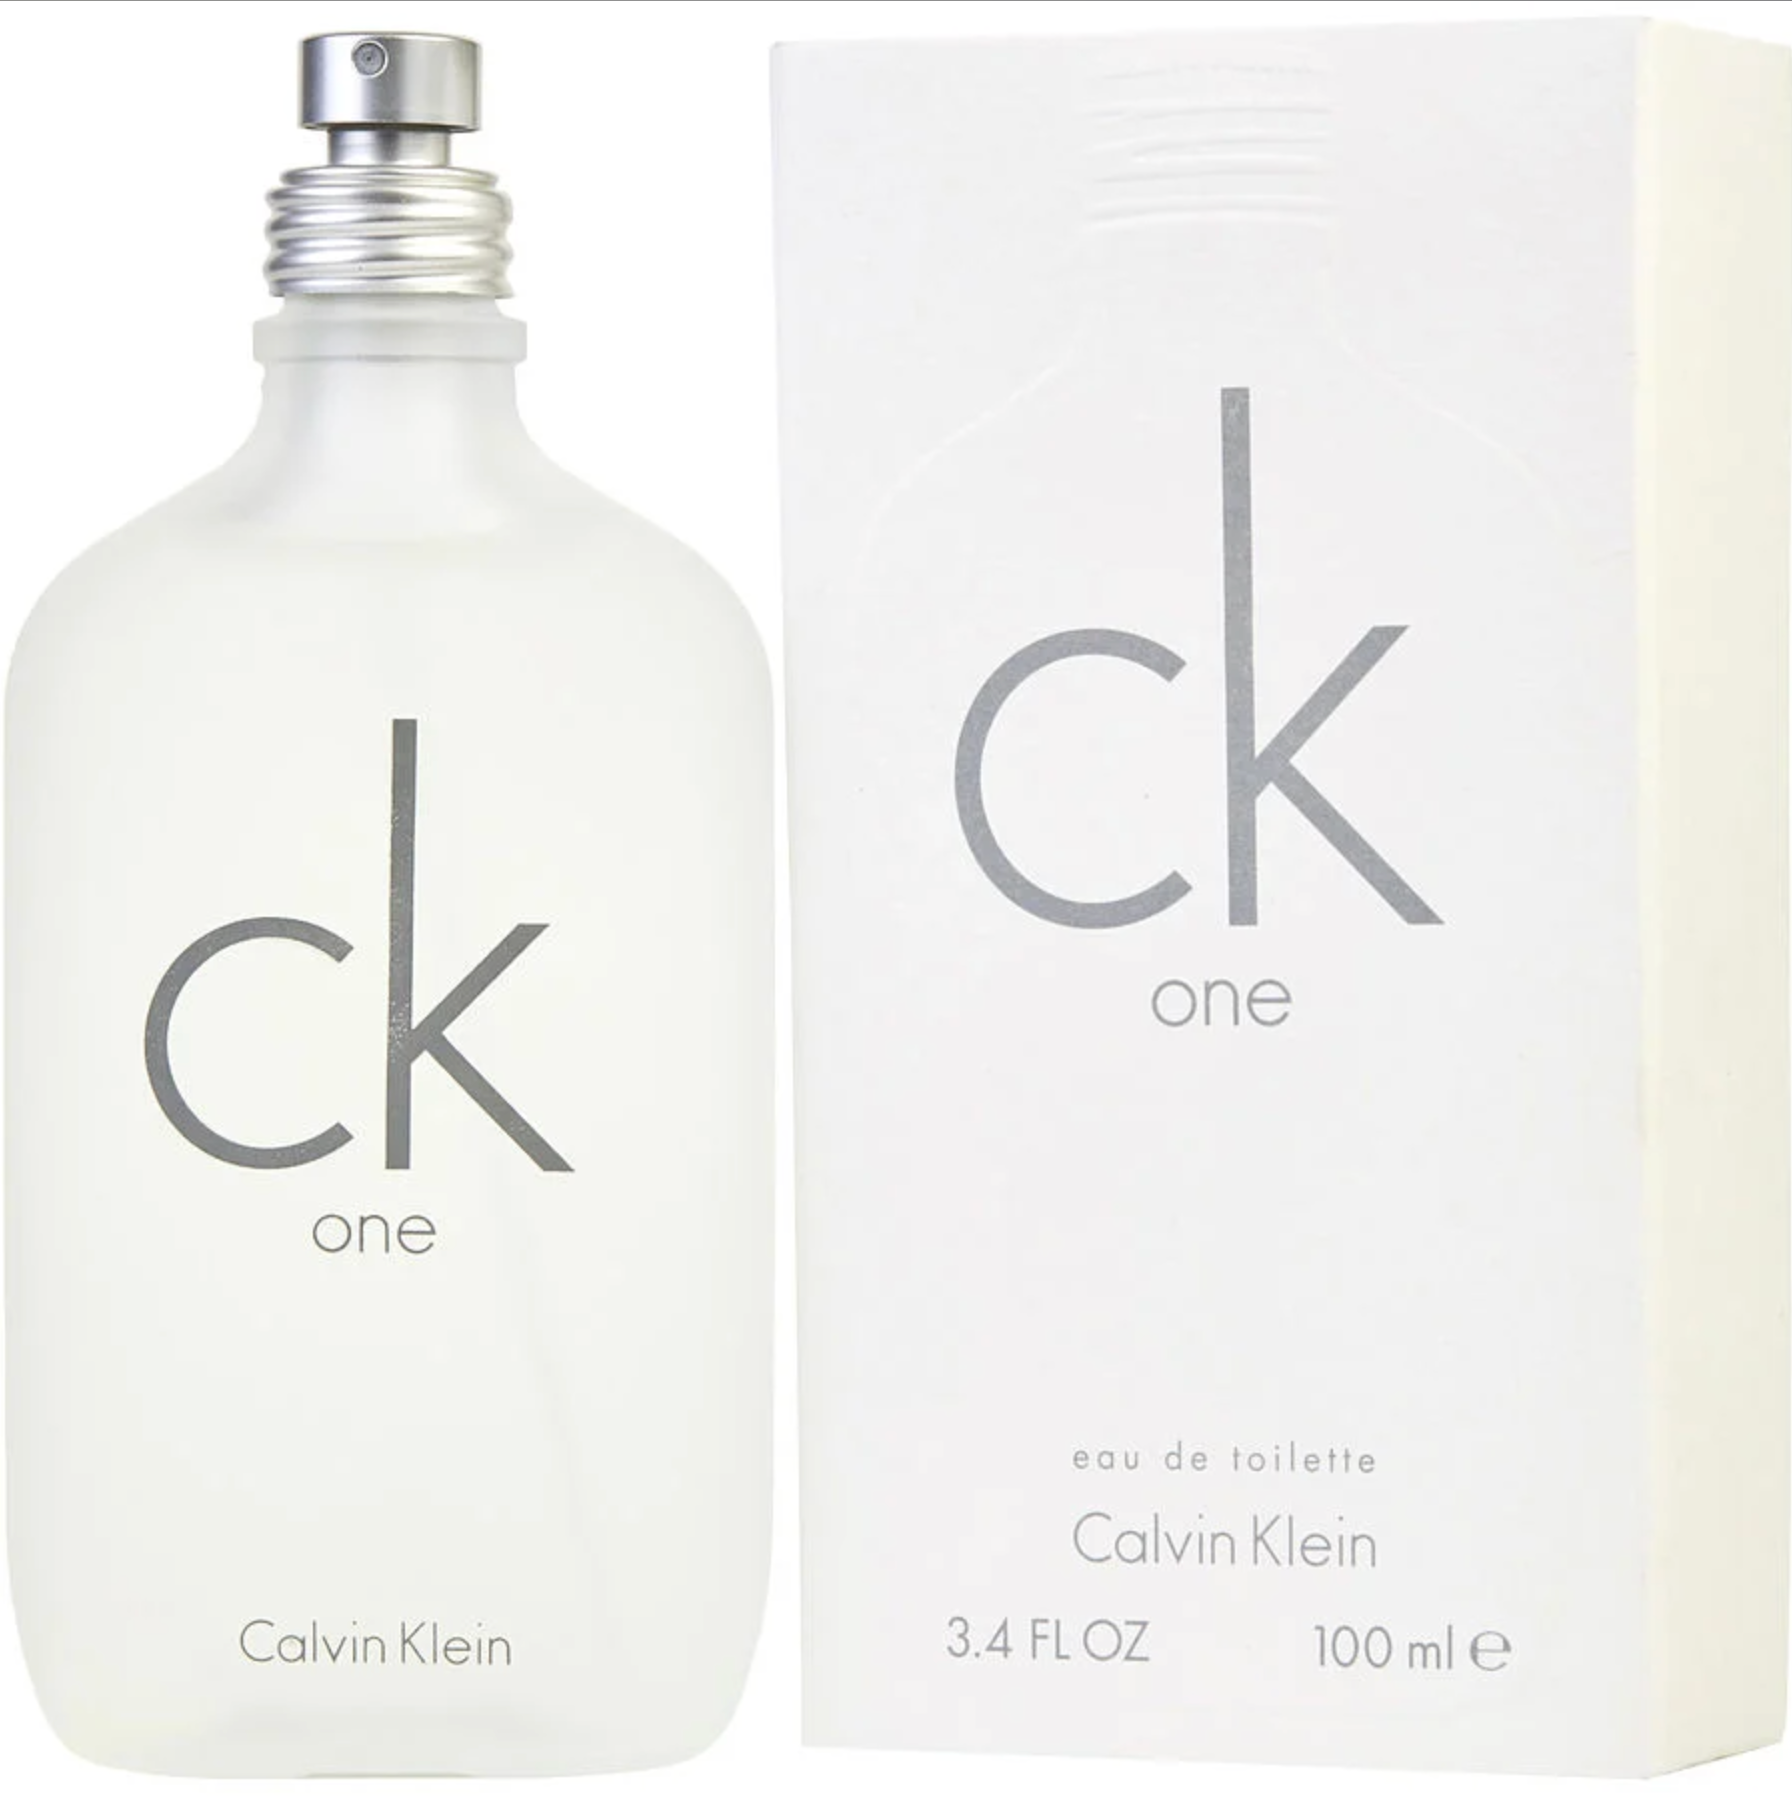 Calvin Klein Ck One for Men